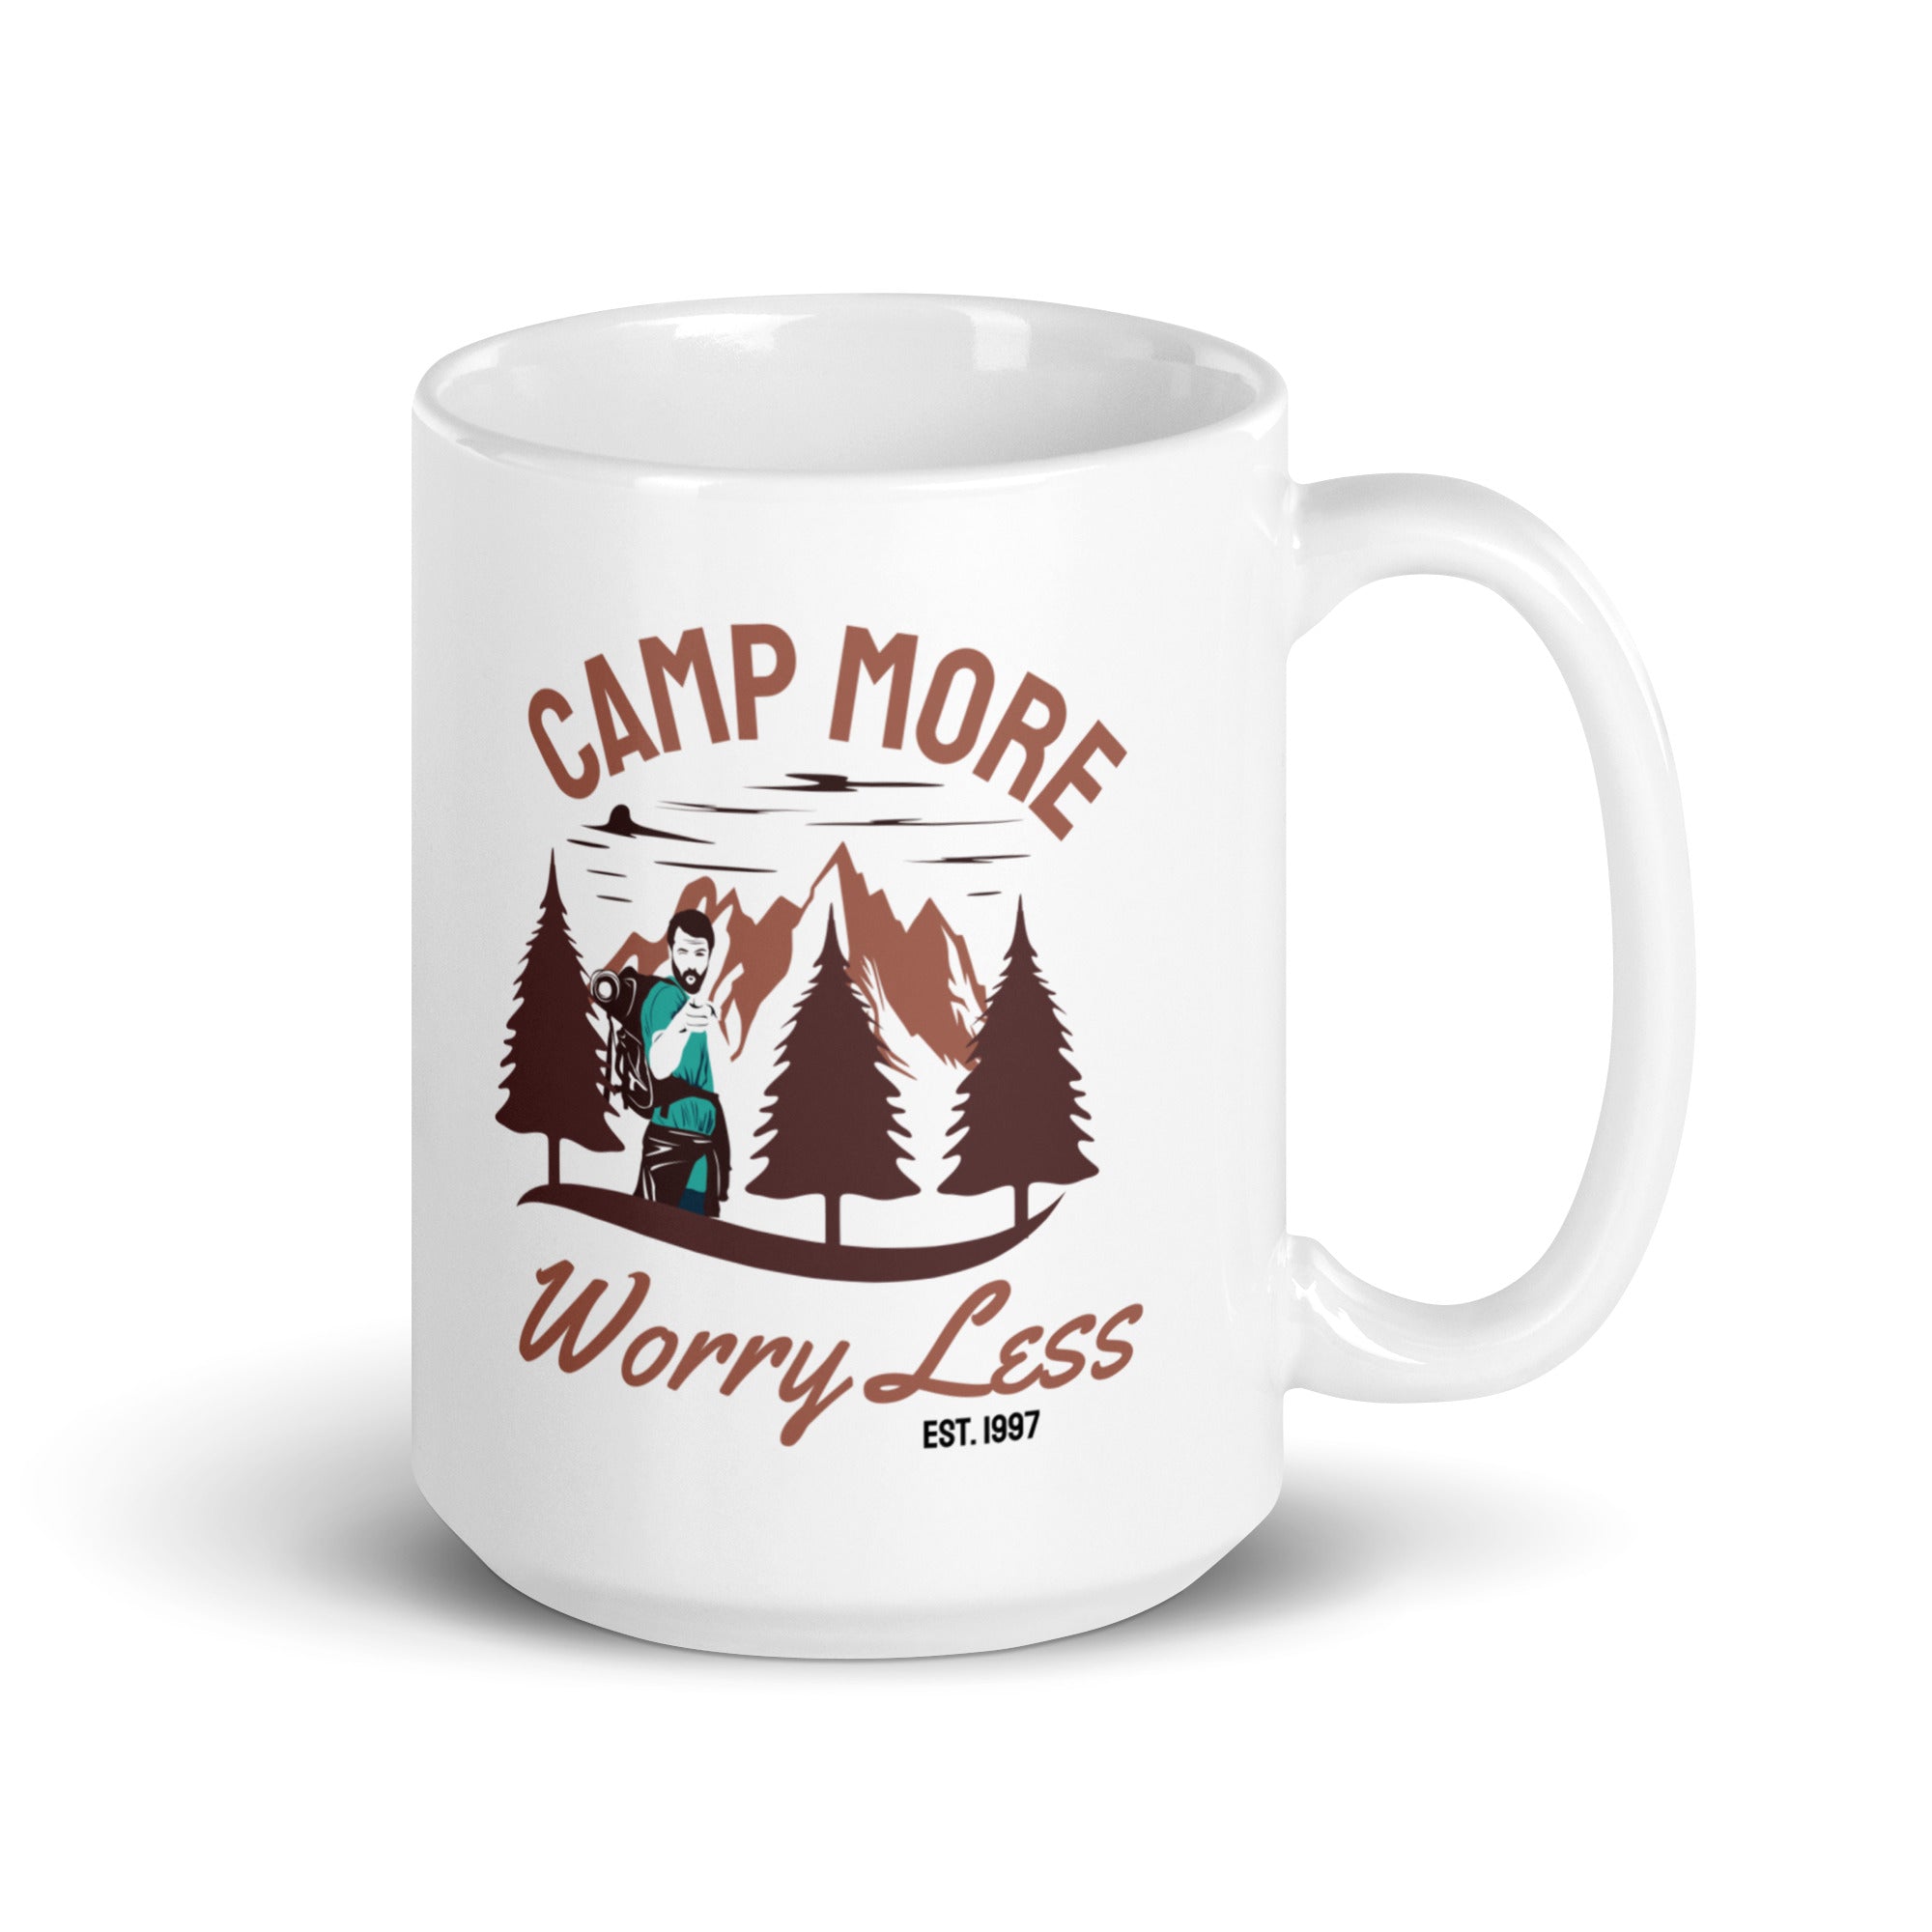 Camp More - White Mug